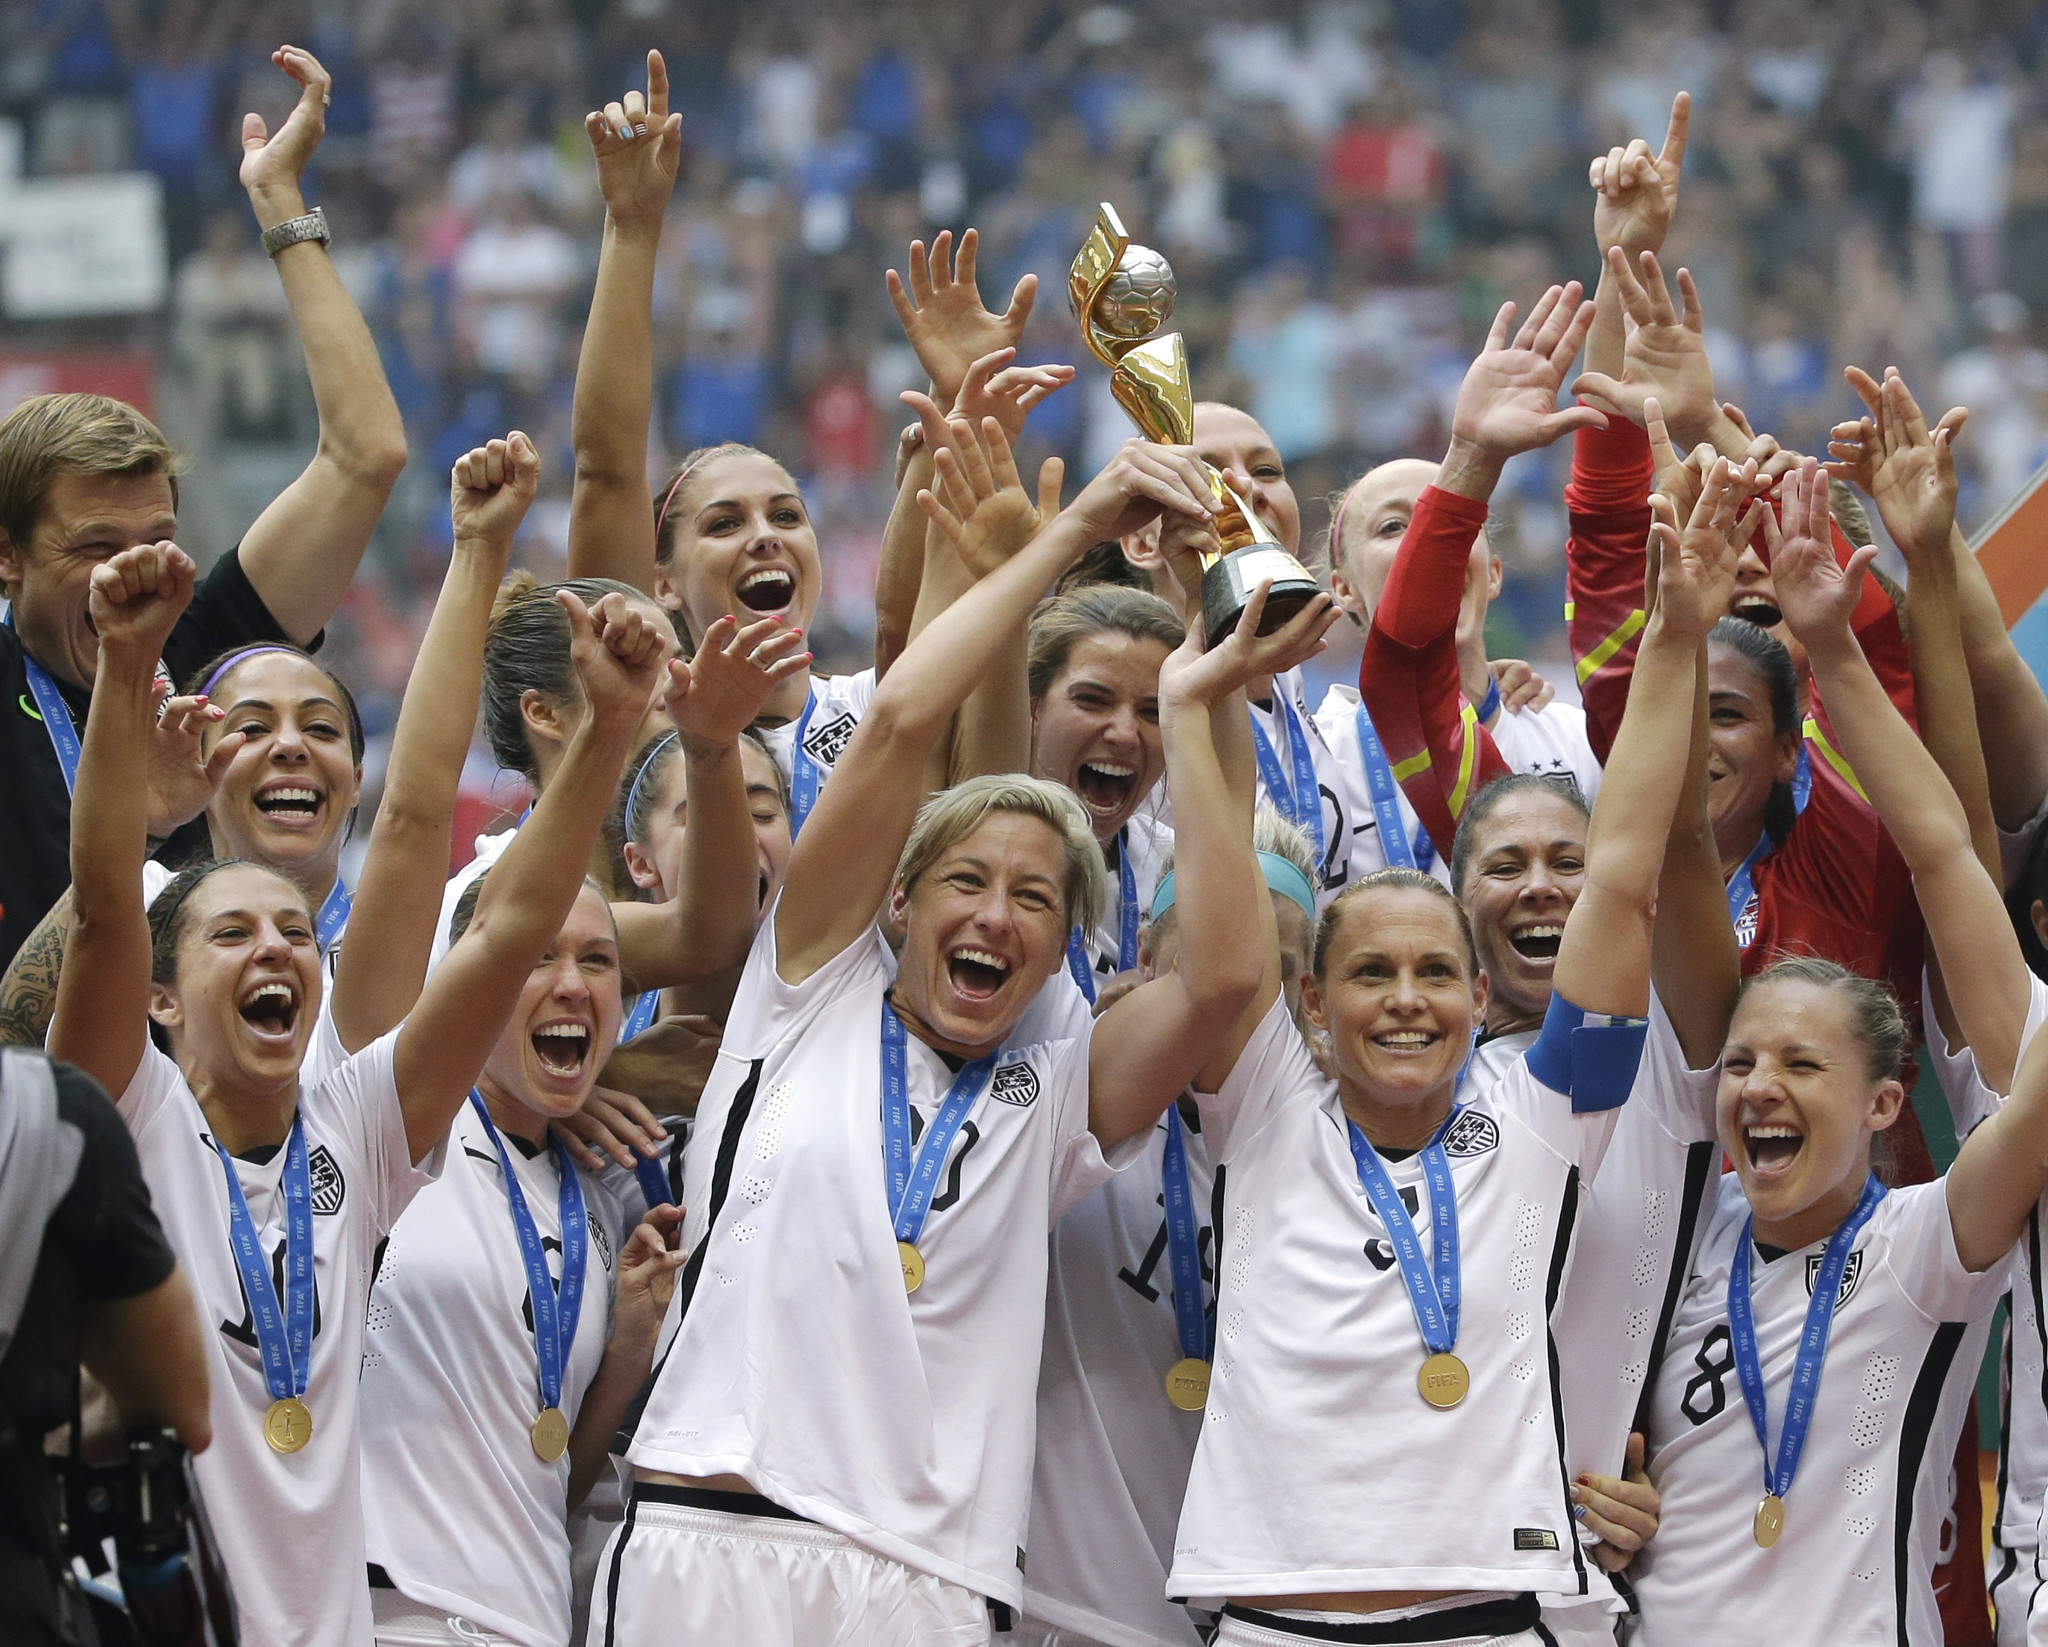 U.S. women's soccer team will play more often on grass fields - Chicago